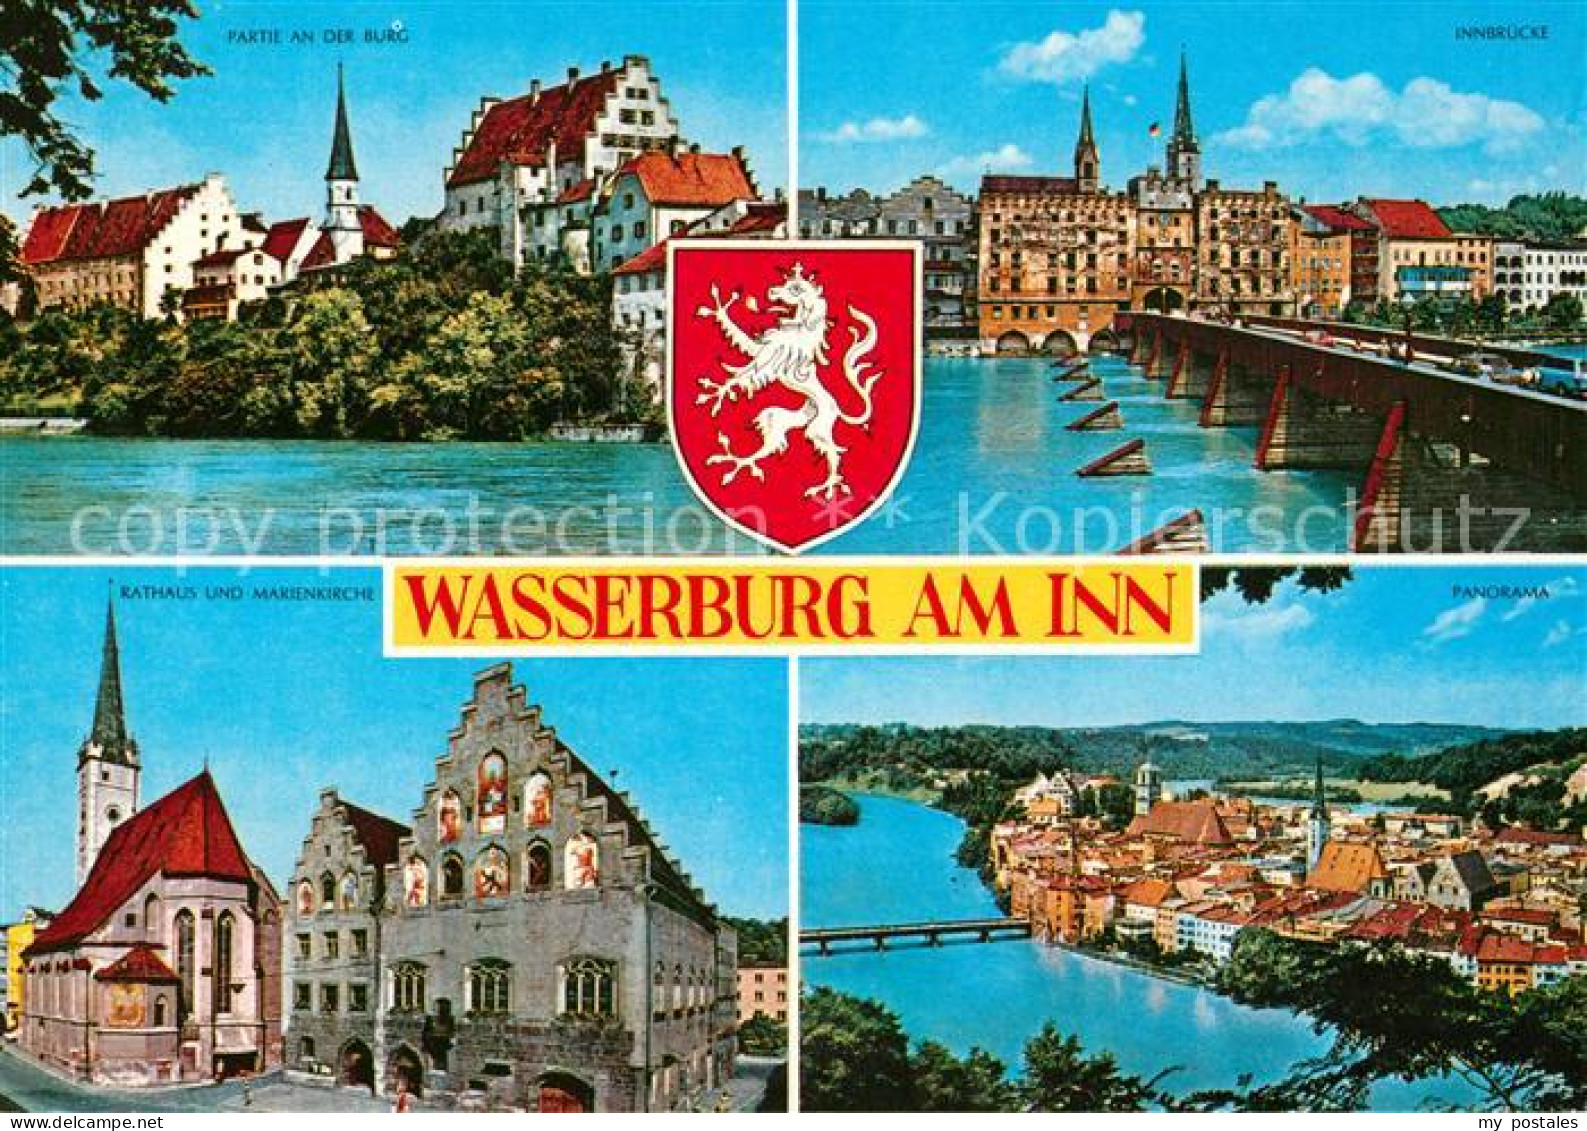 73232803 Wasserburg Inn Partie An Der Burg Innbruecke Rathaus Marienkirche Panor - Wasserburg (Inn)